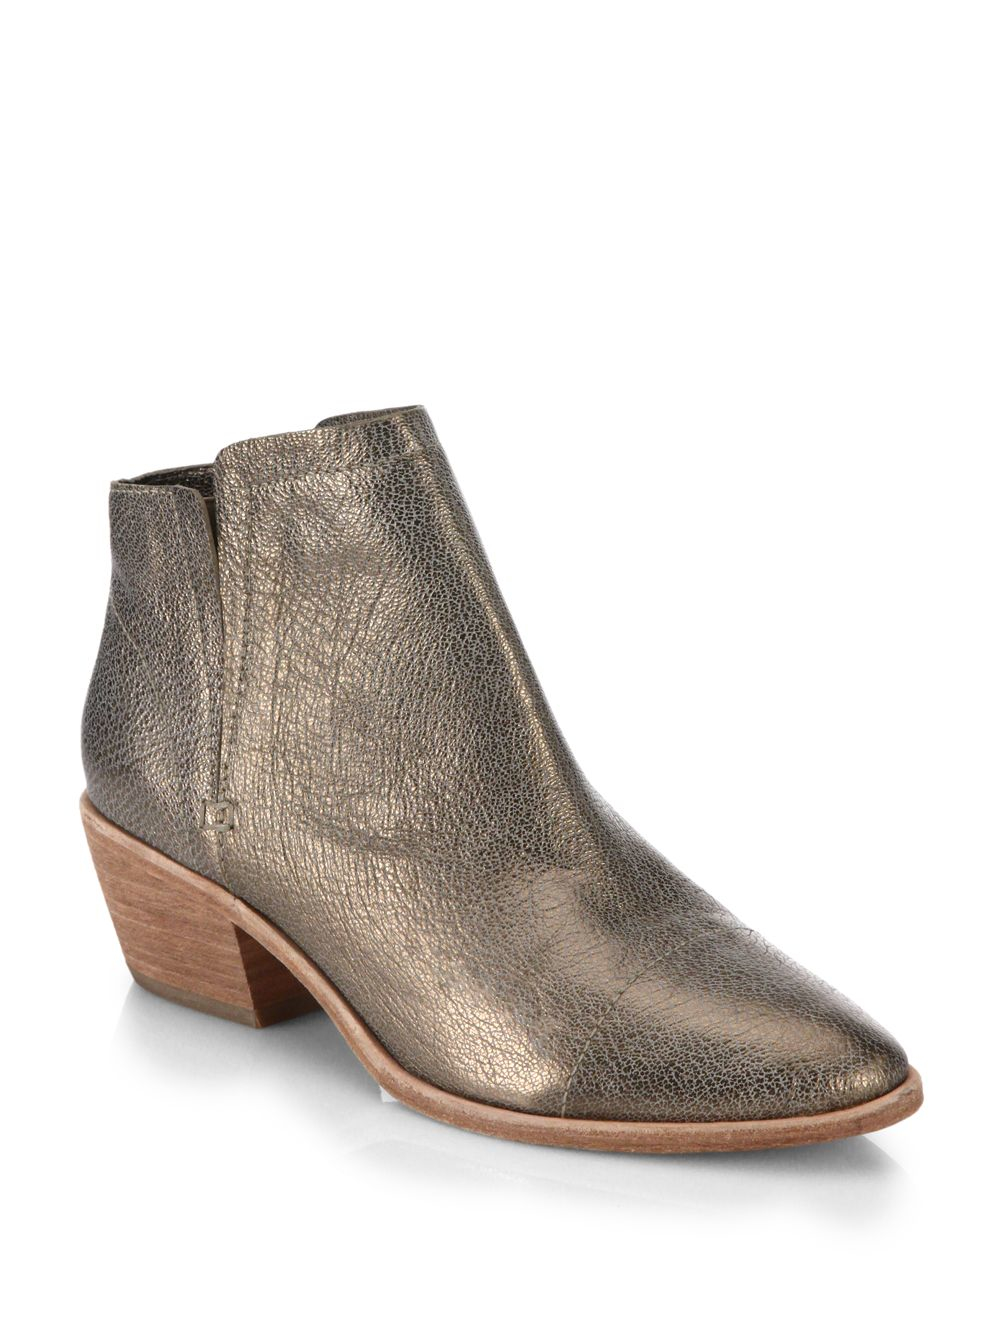 Joie Jodi Metallic Leather Ankle Boots - Lyst